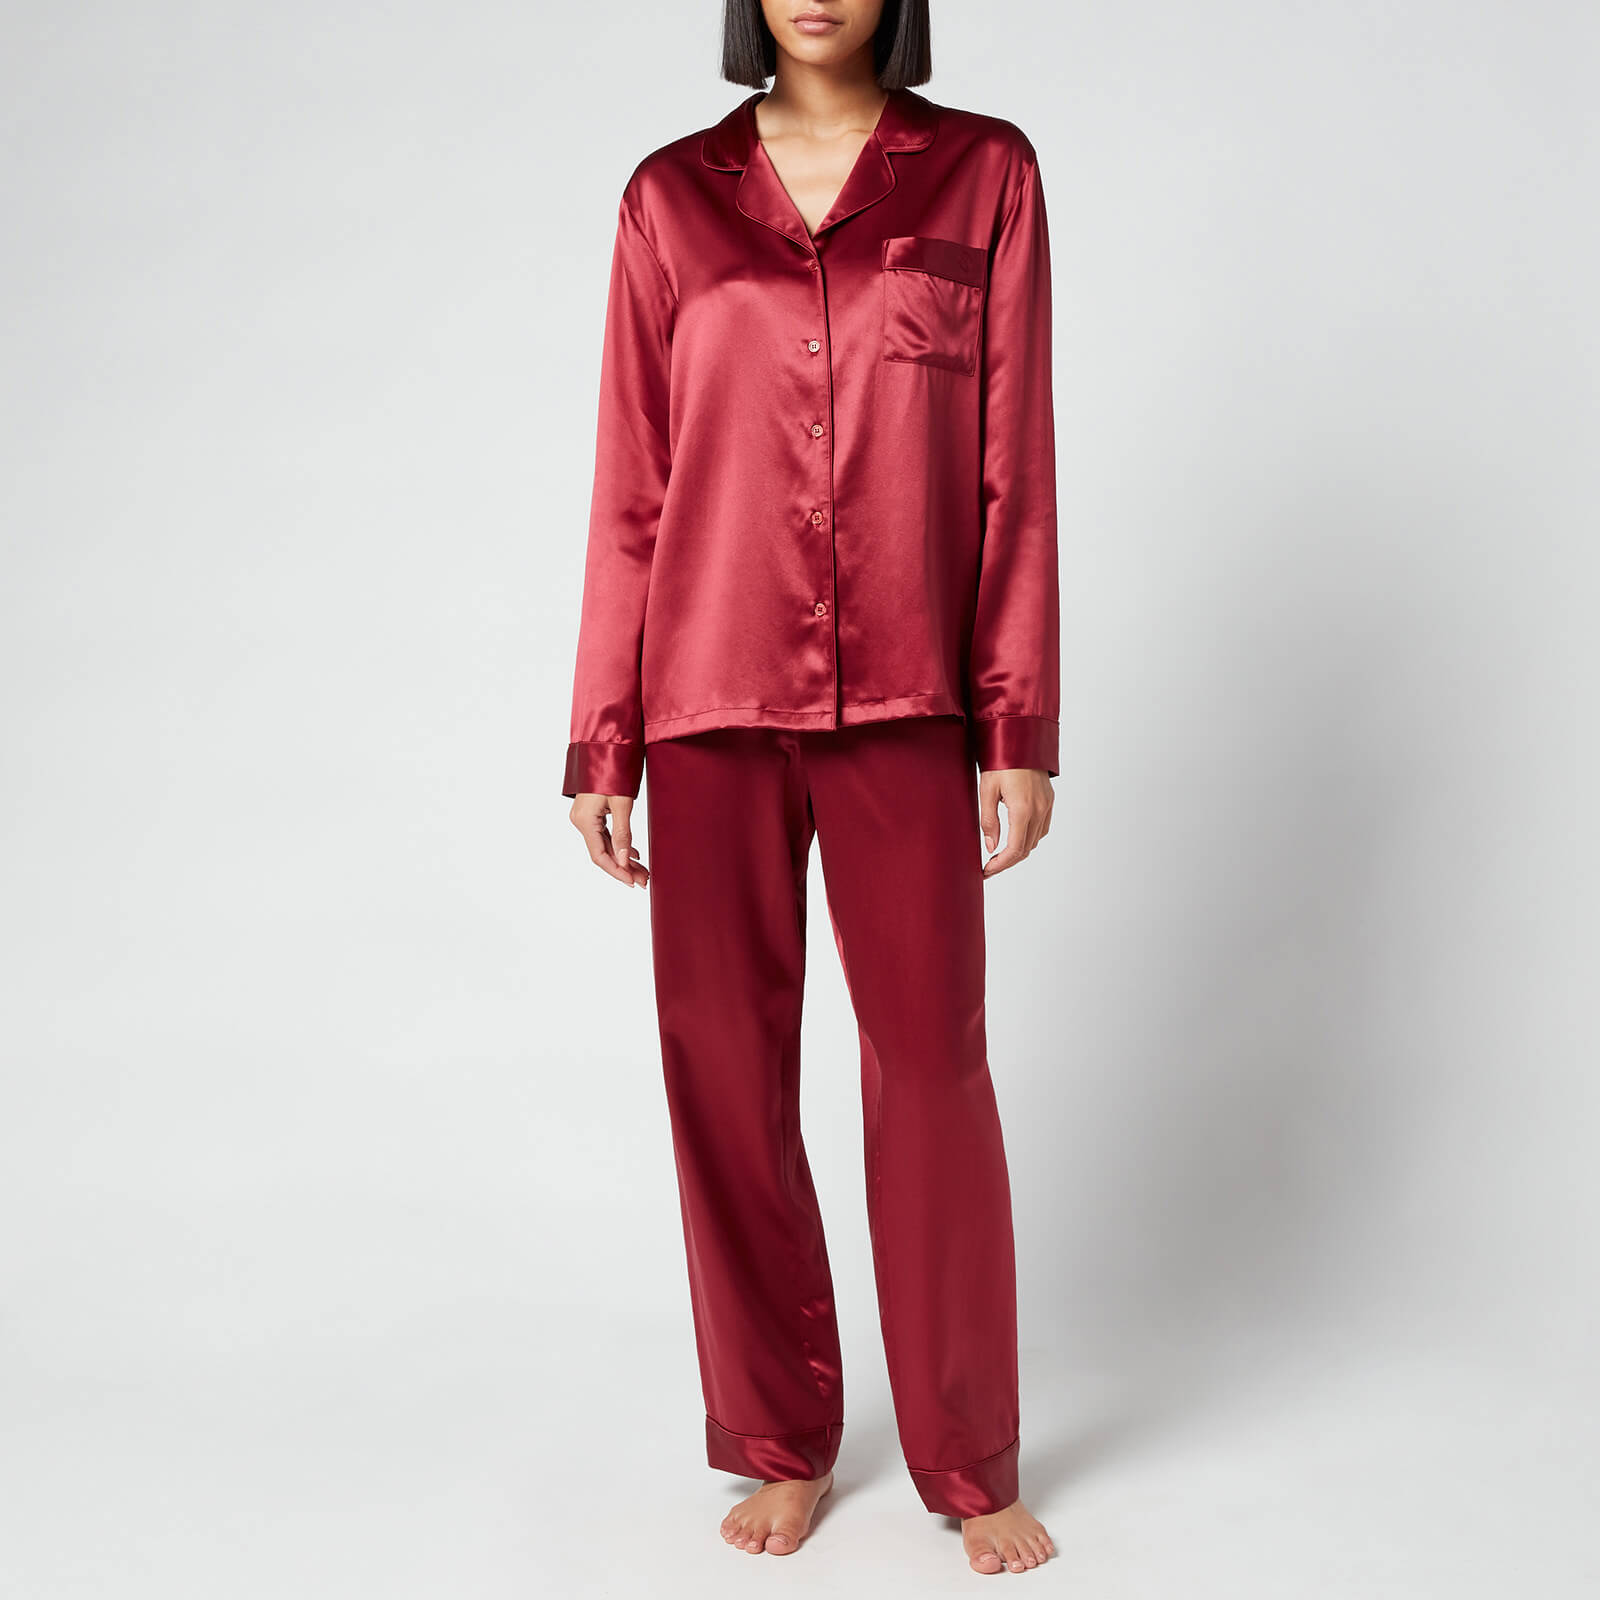 Freya Silk Pyjamas - Claret Rose - XS